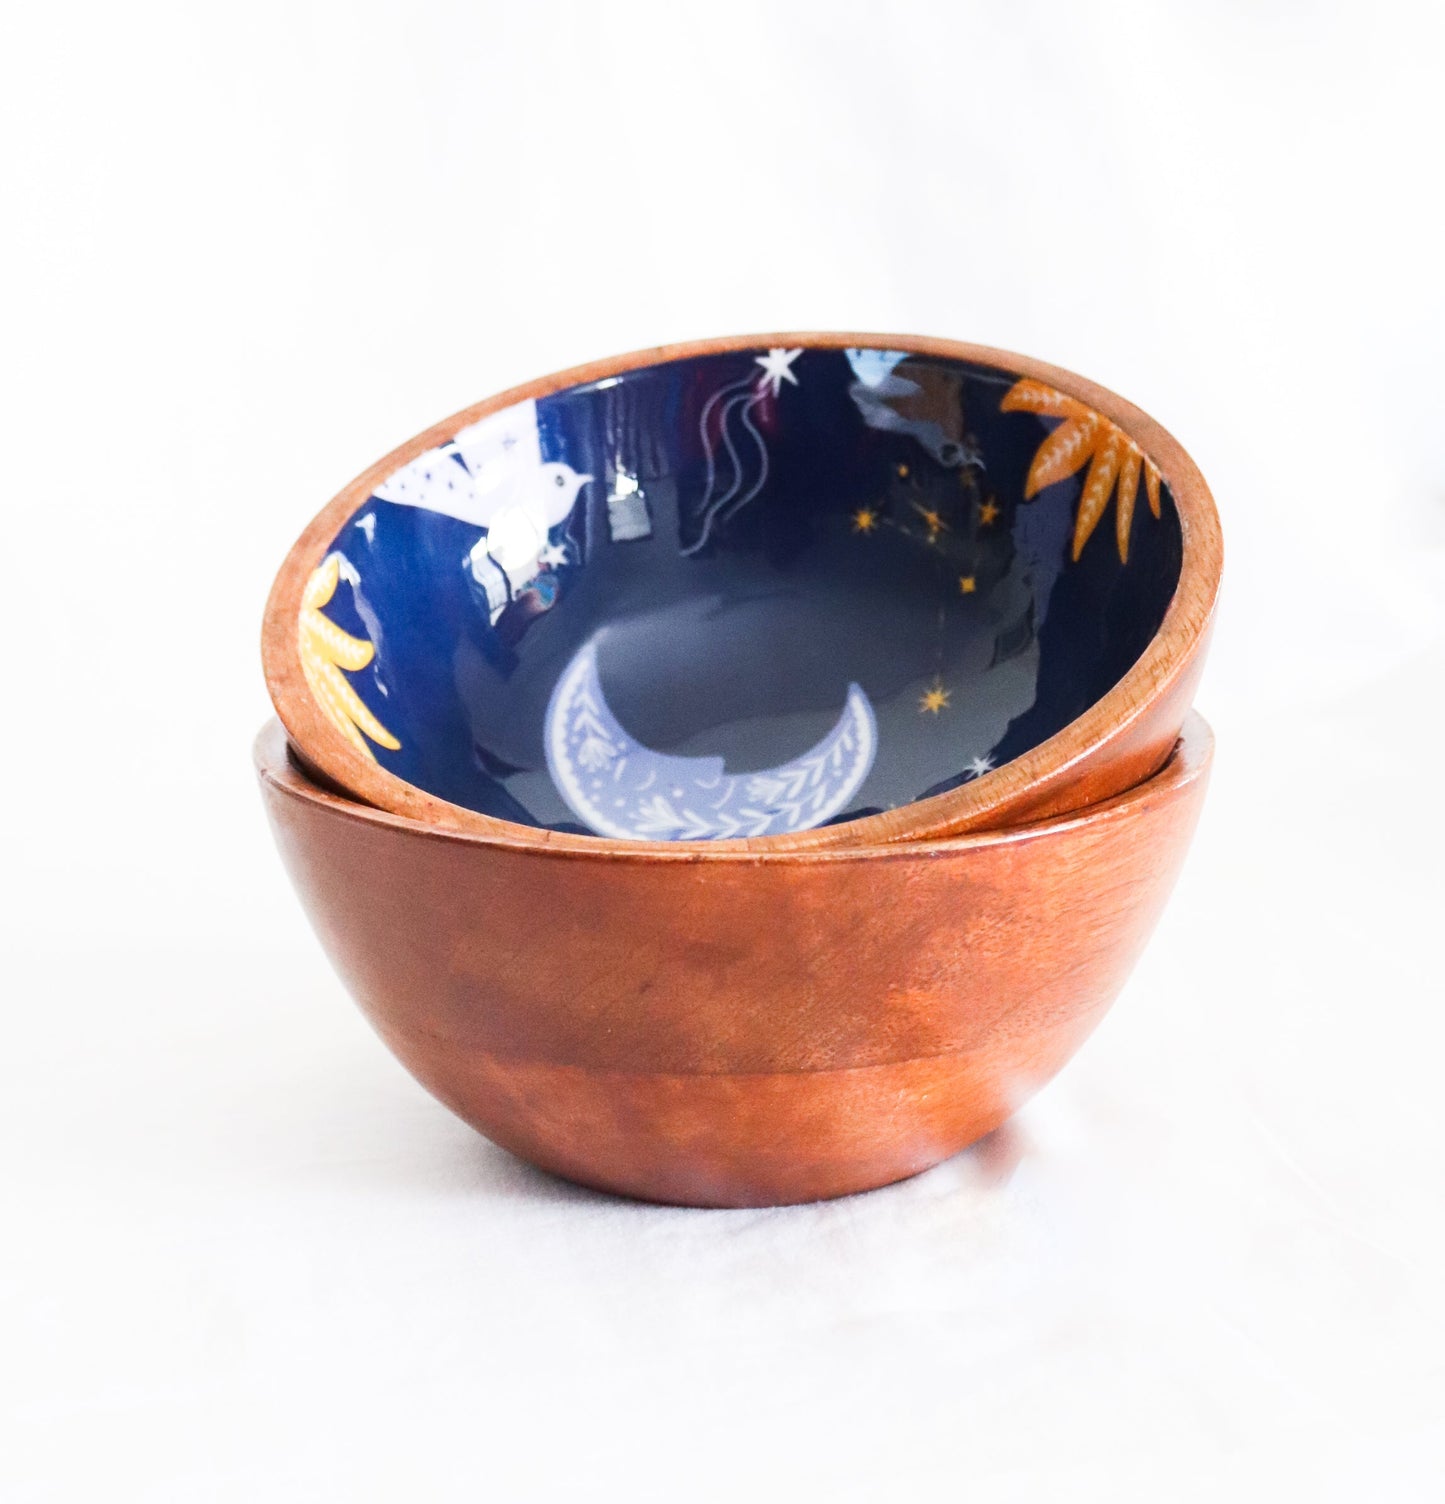 Pre- order - Small wood serving bowls - Mango wood bowls - Enamel printed wooden bowls - Forever